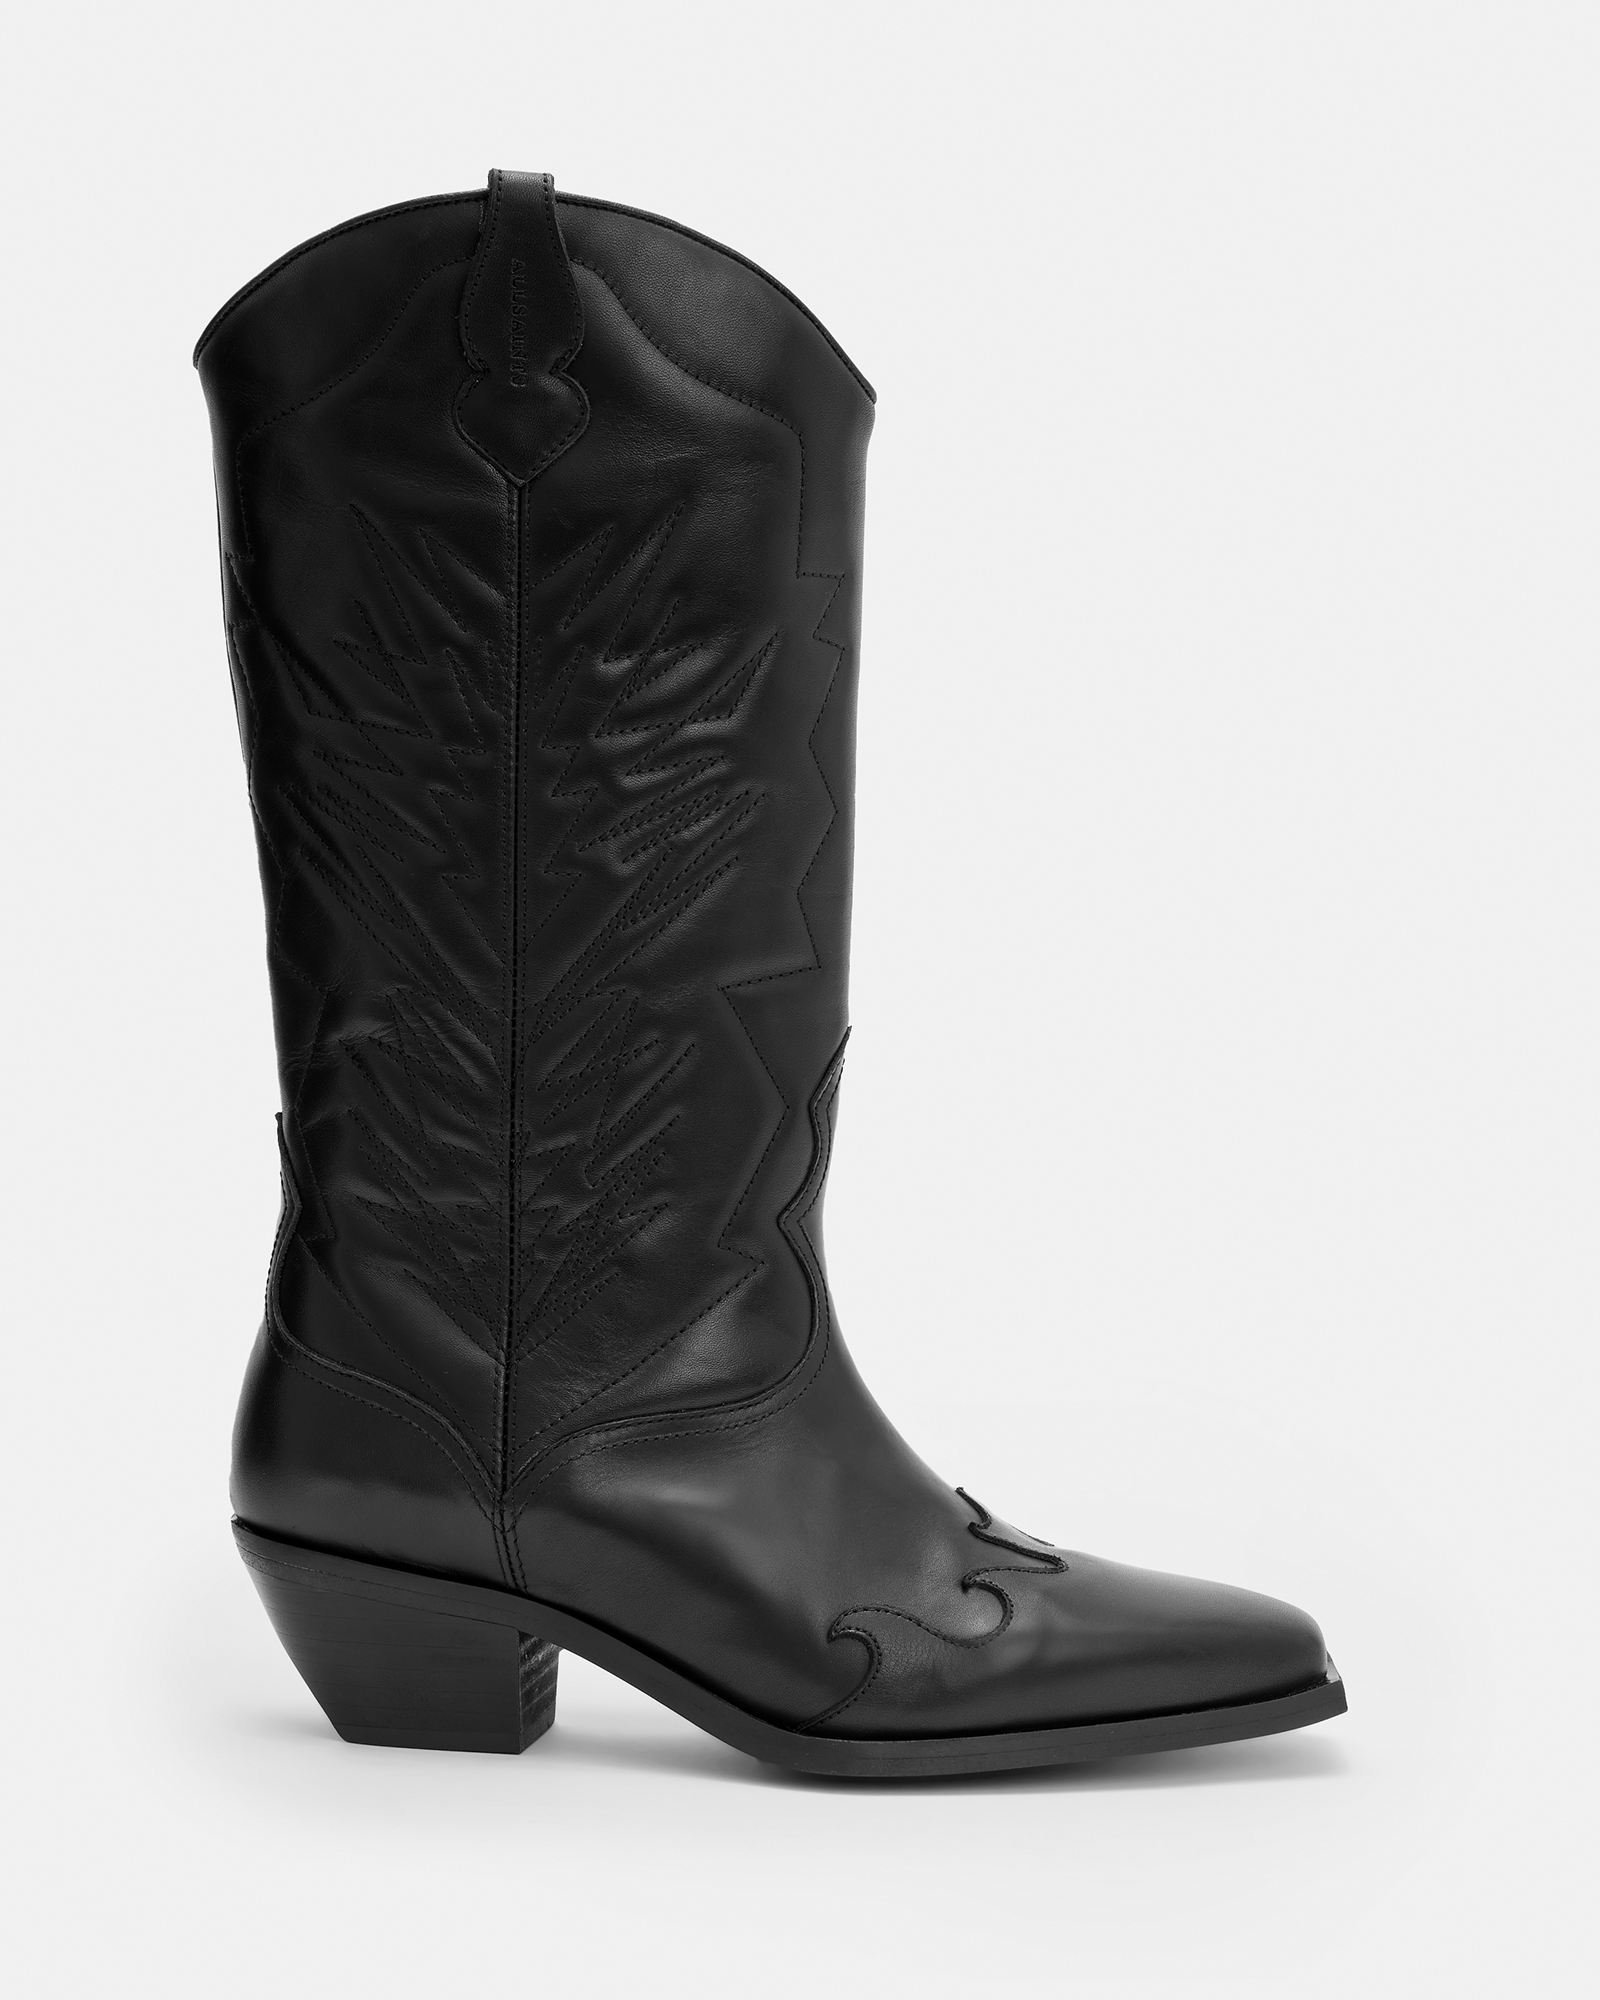 Kacey Leather Cowboy Boots Black | ALLSAINTS